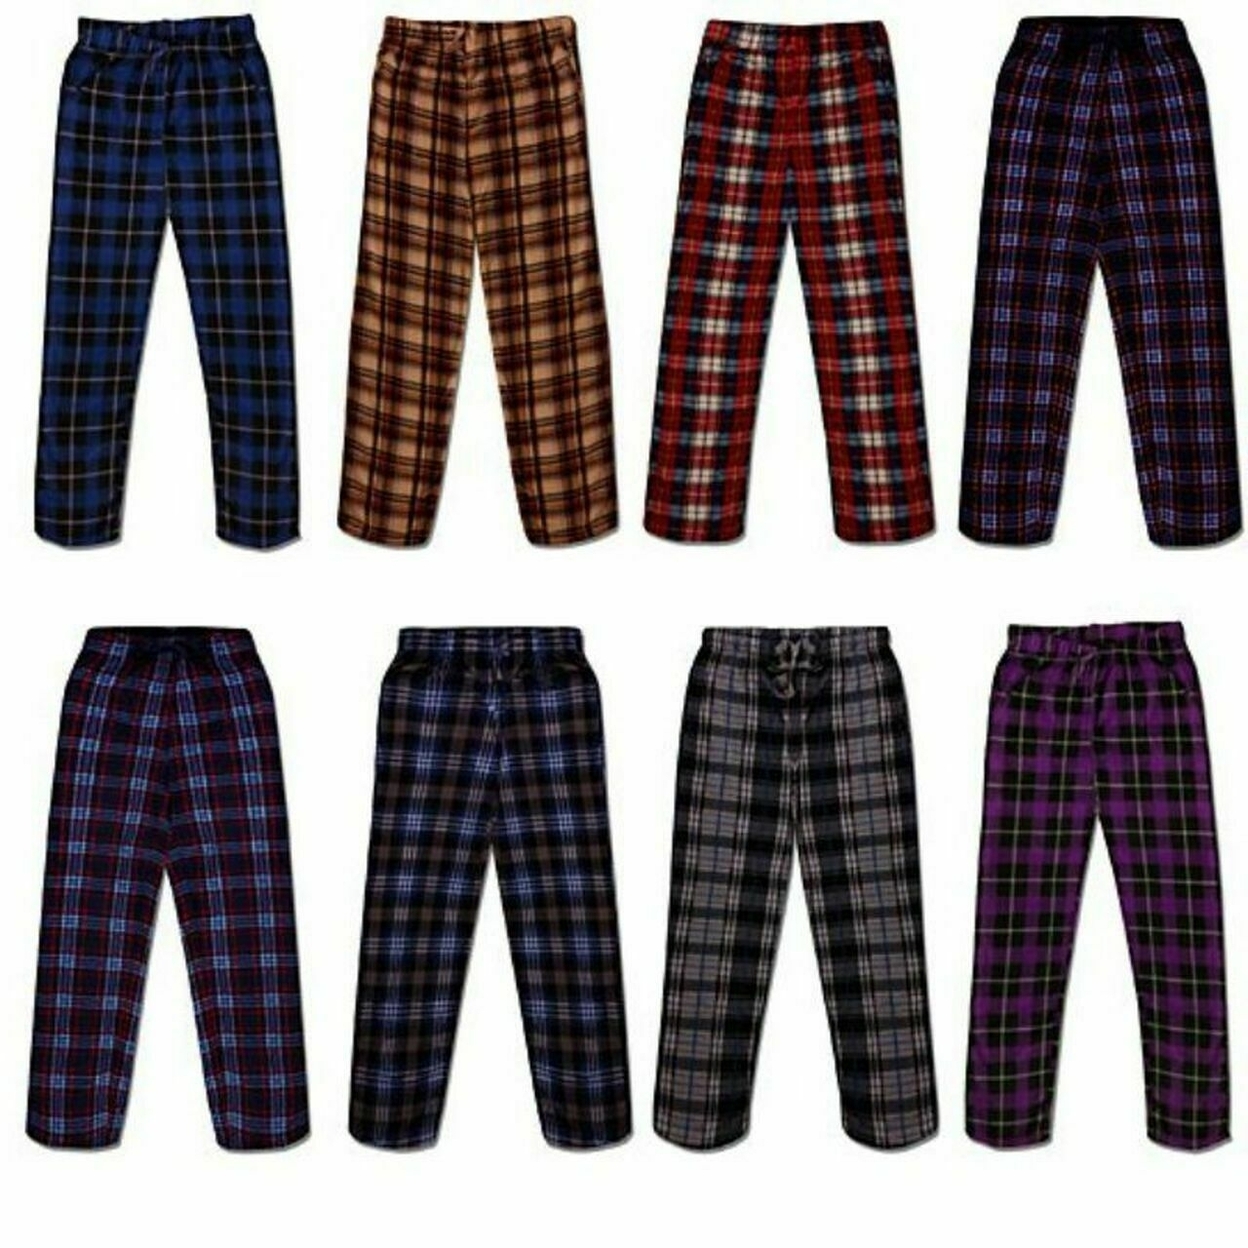 2-Pack: Men's Ultra Soft Cozy Flannel Fleece Plaid Pajama Sleep Bottom Lounge Pants - Red & Blue, Medium